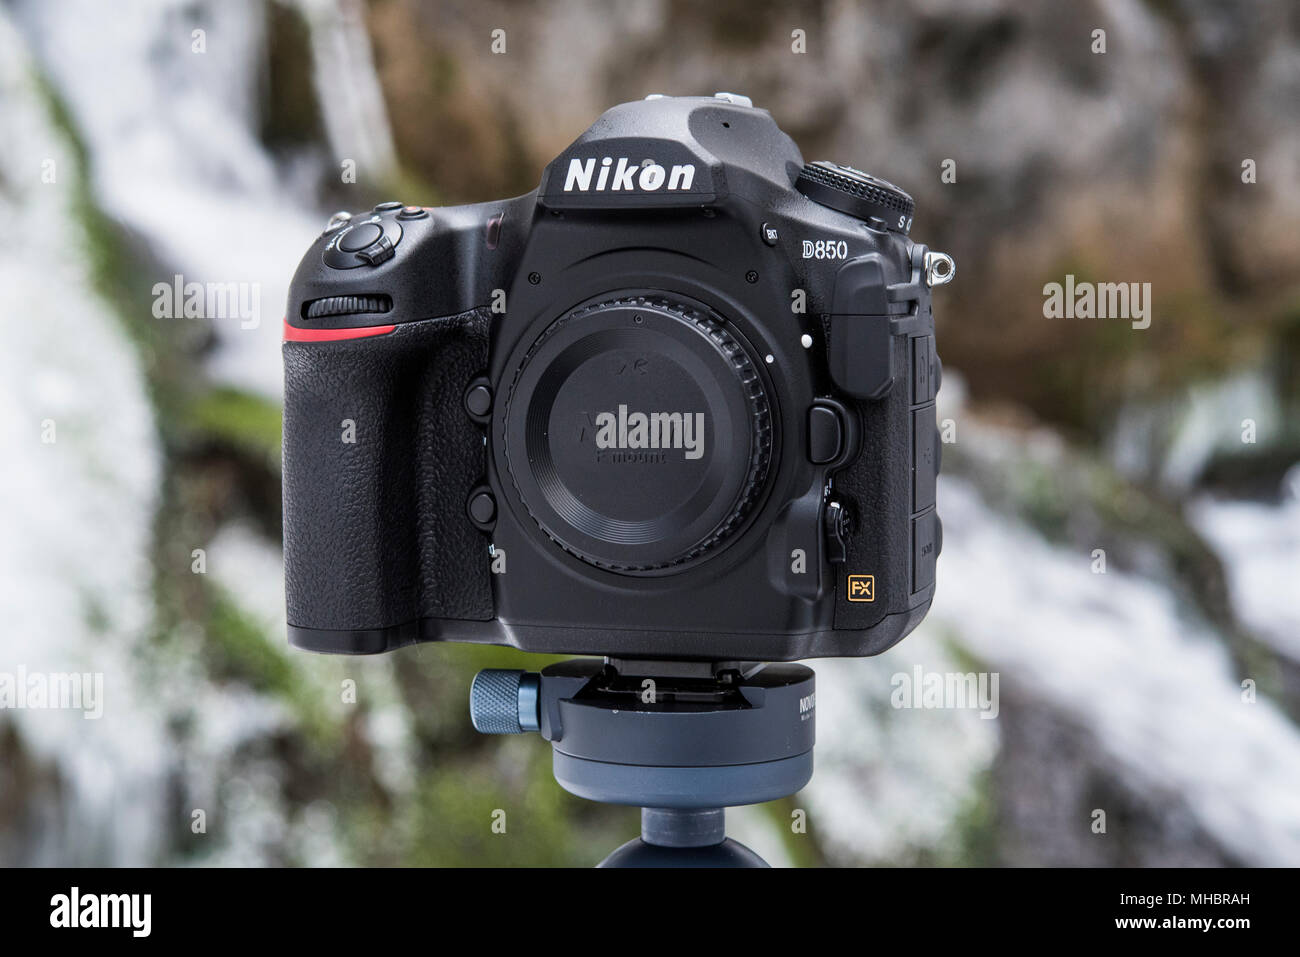 Nikon D850, Kamera auf Stativ Stockfotografie - Alamy